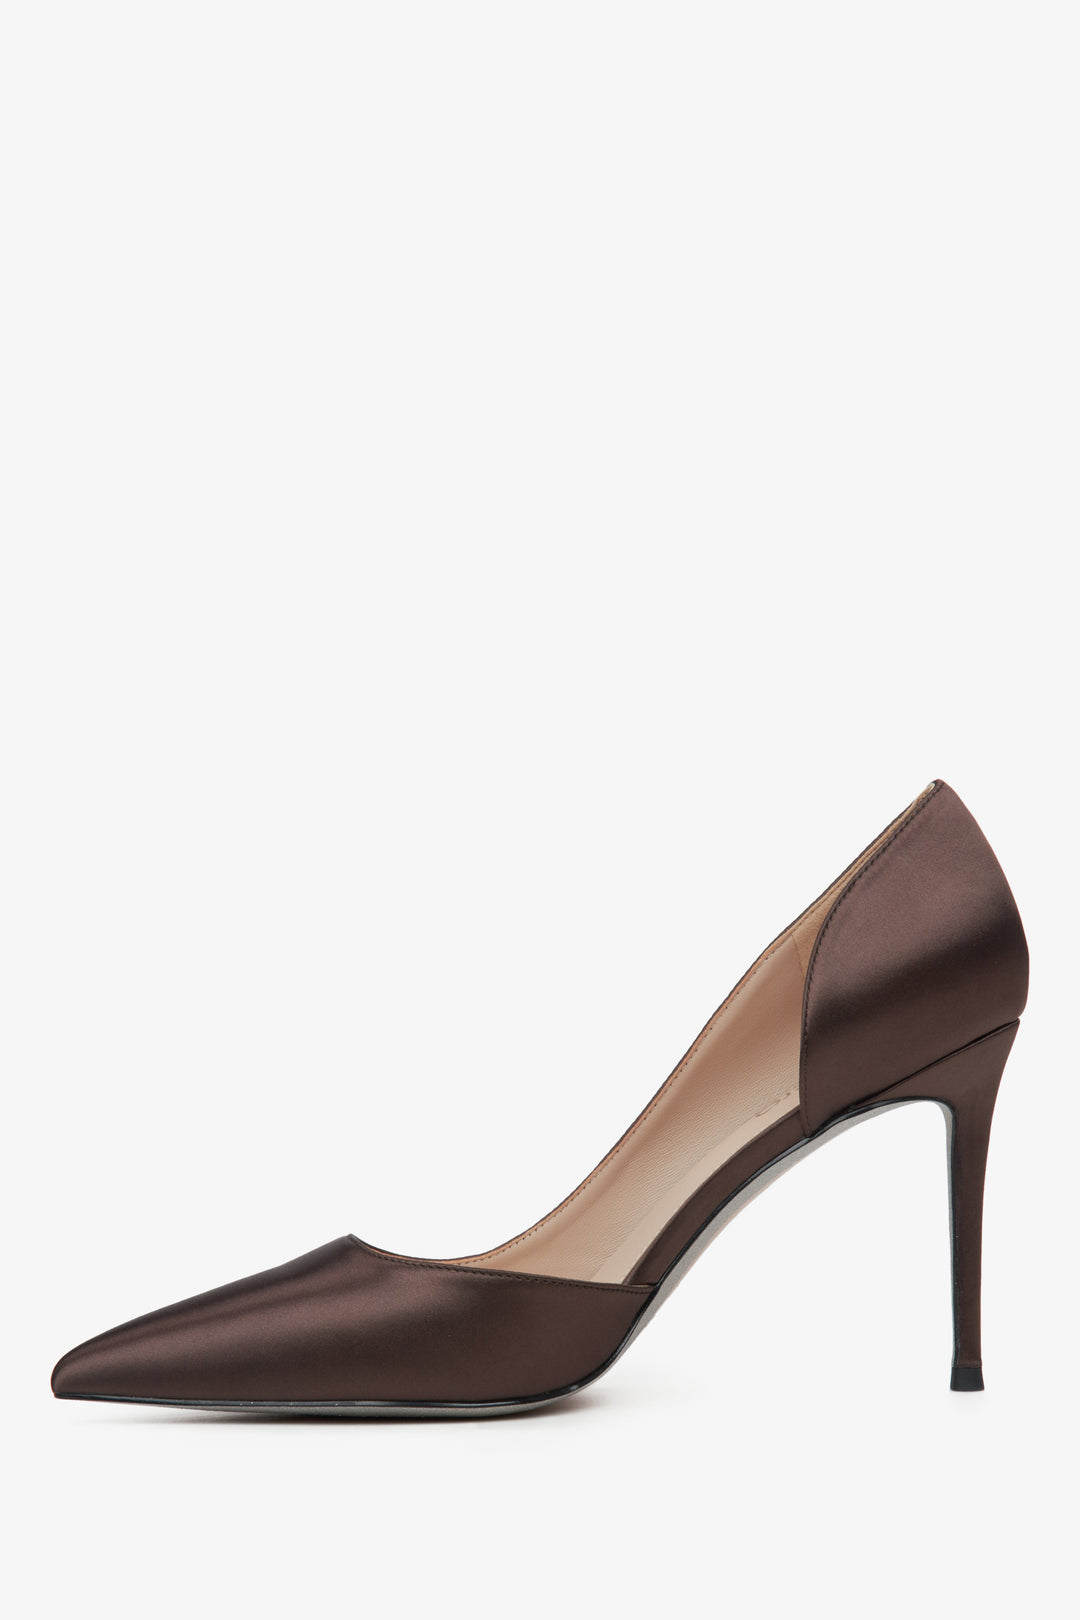 Women's darker brown Estro high heels with a satin finish - shoe profile.